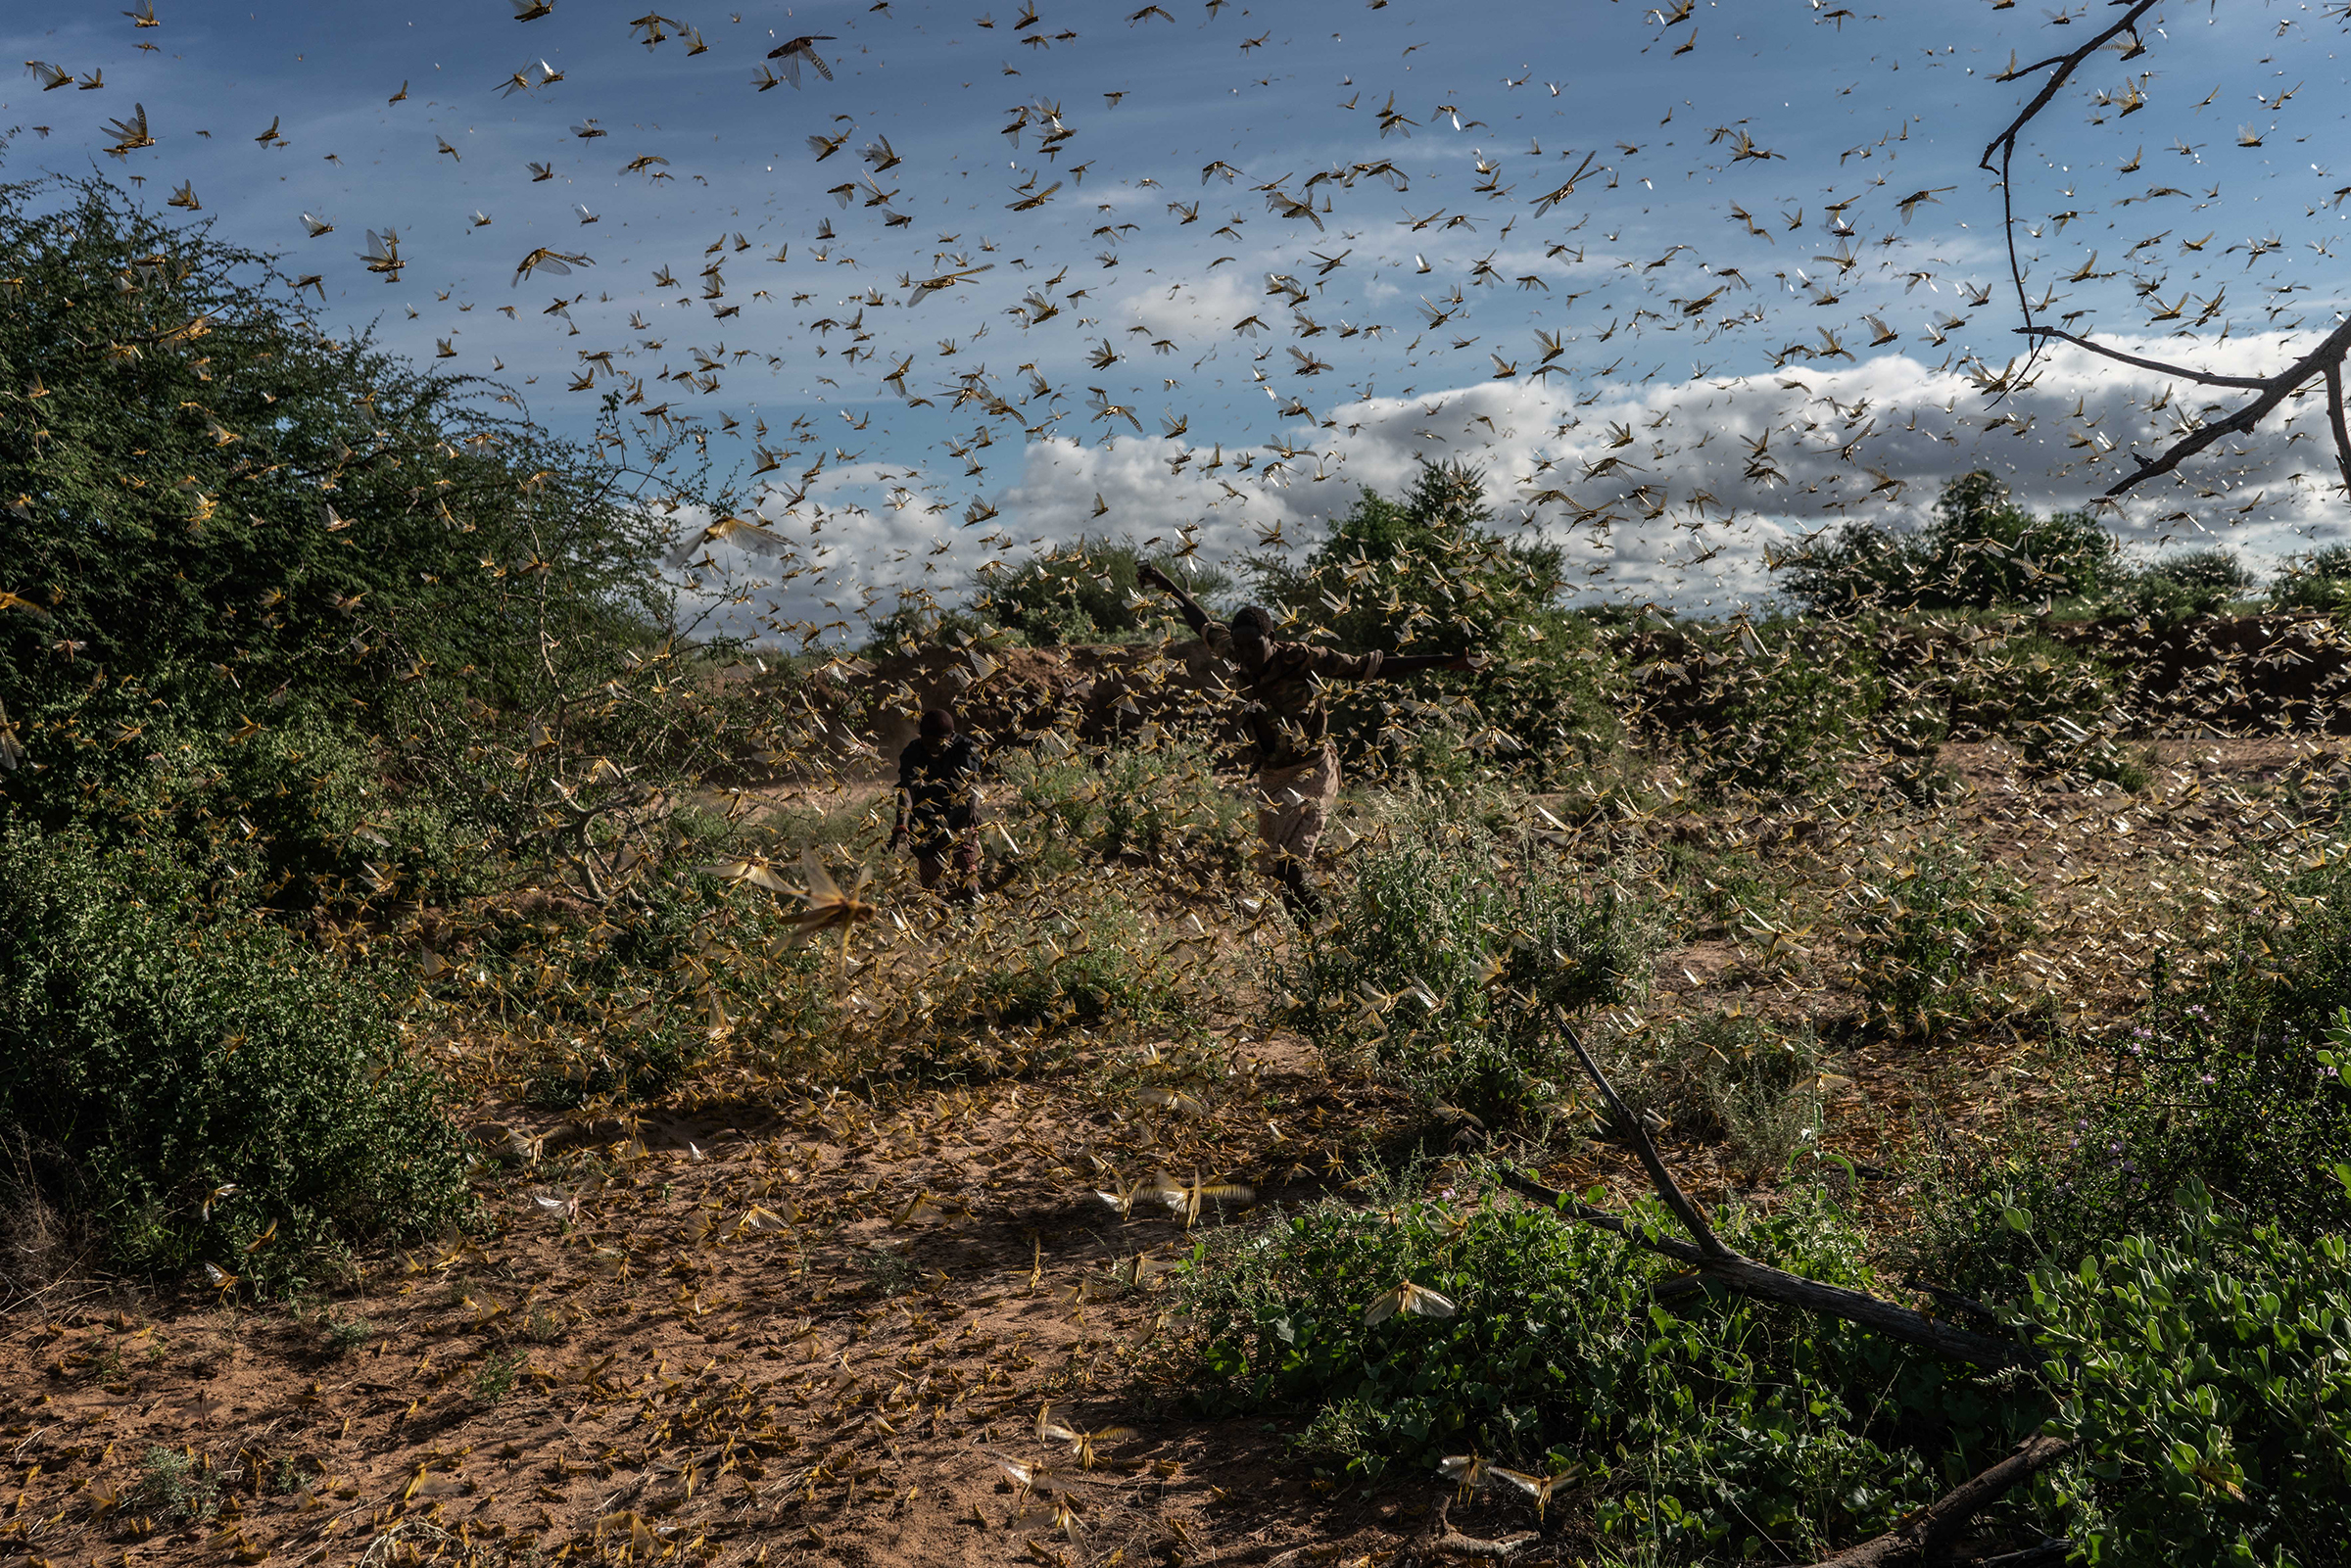 East Africa Experiences Worst Locust Swarms In Decades